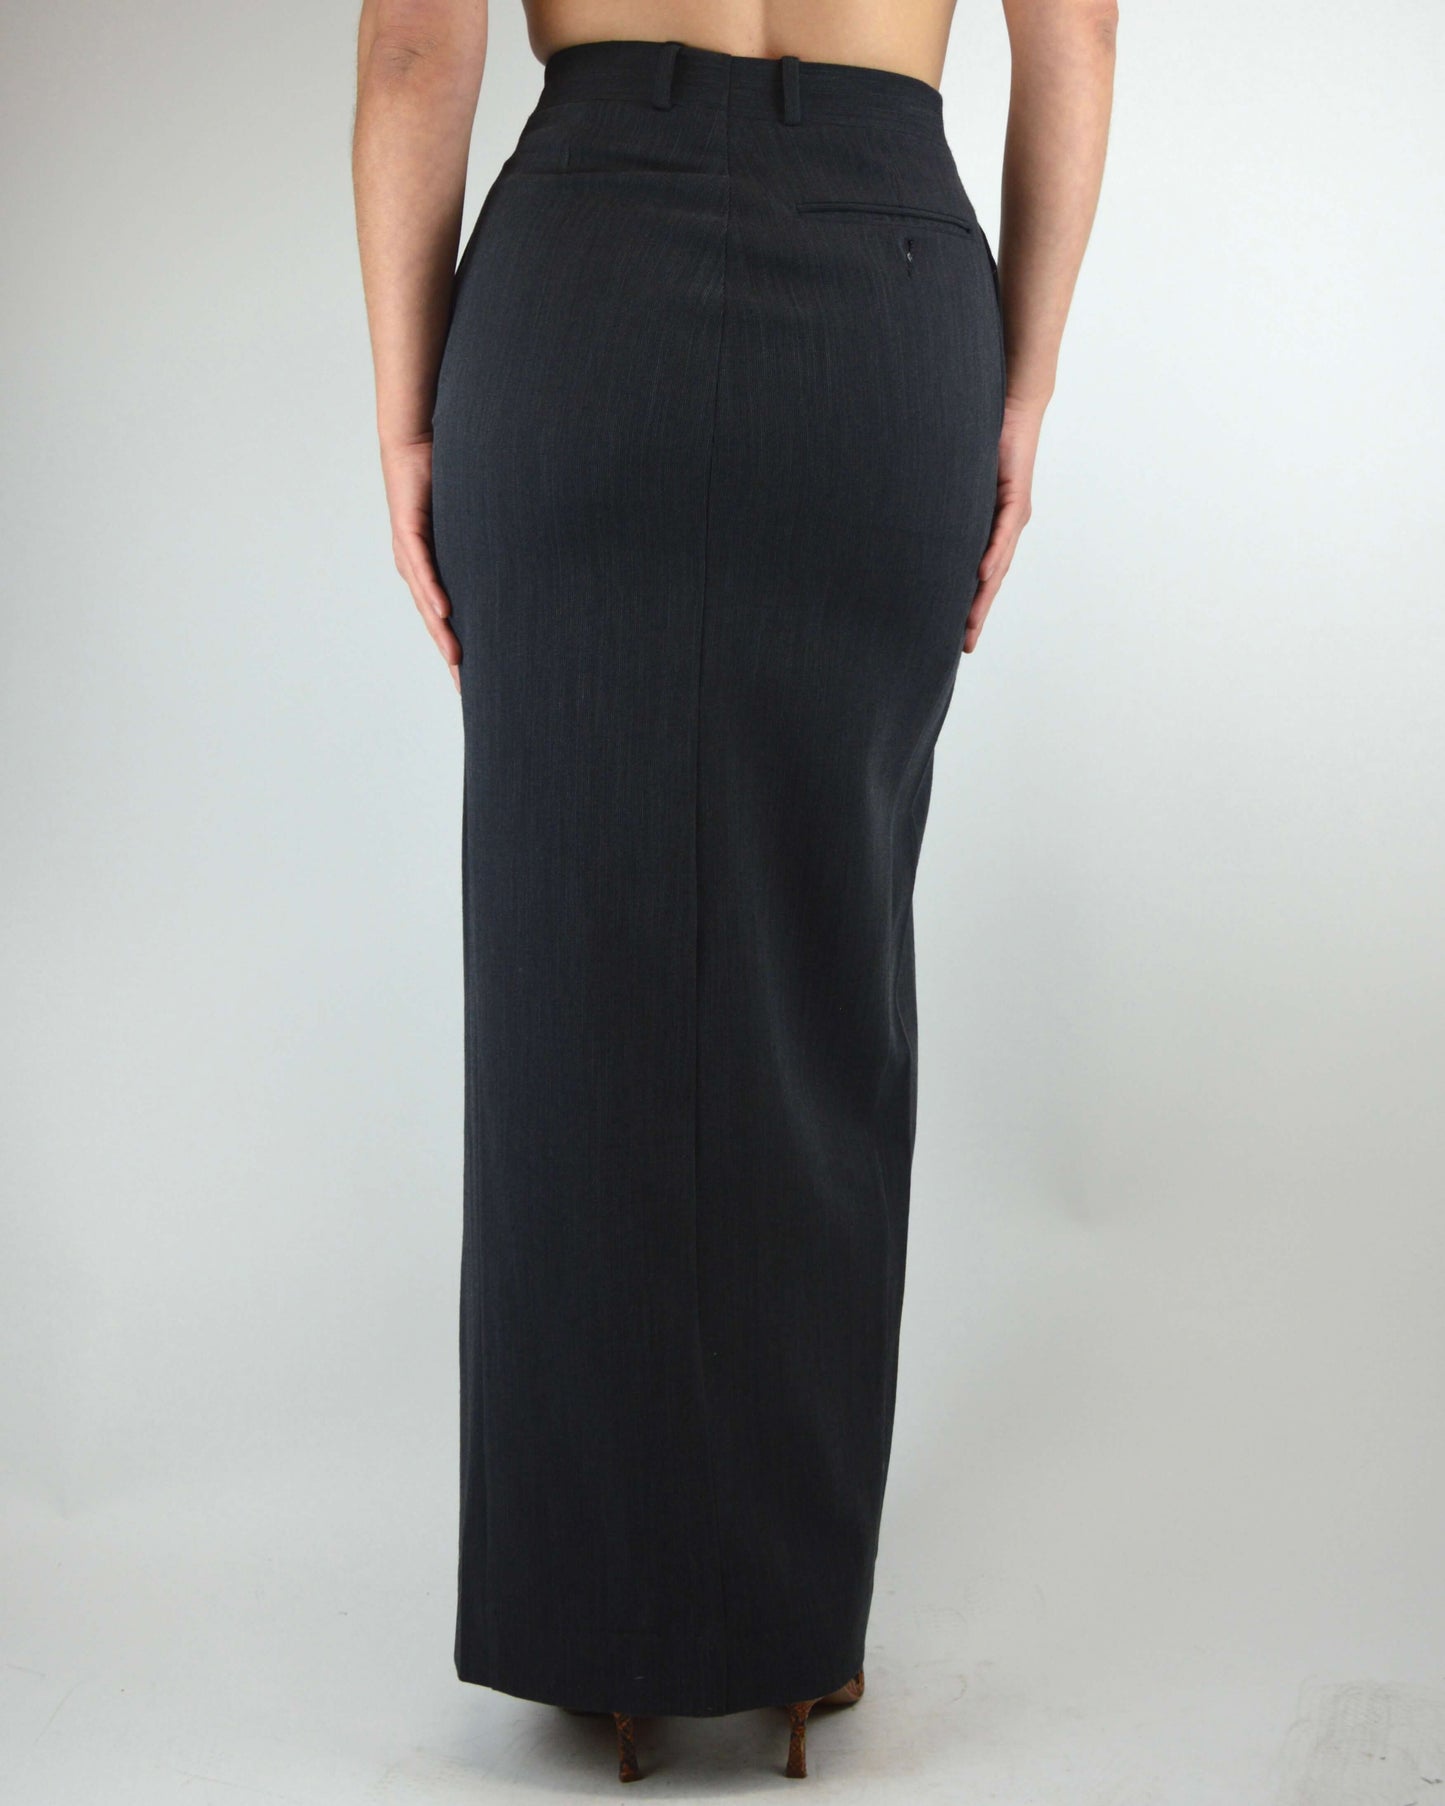 Long Skirt - Elastic Textured Grey (XS/S)